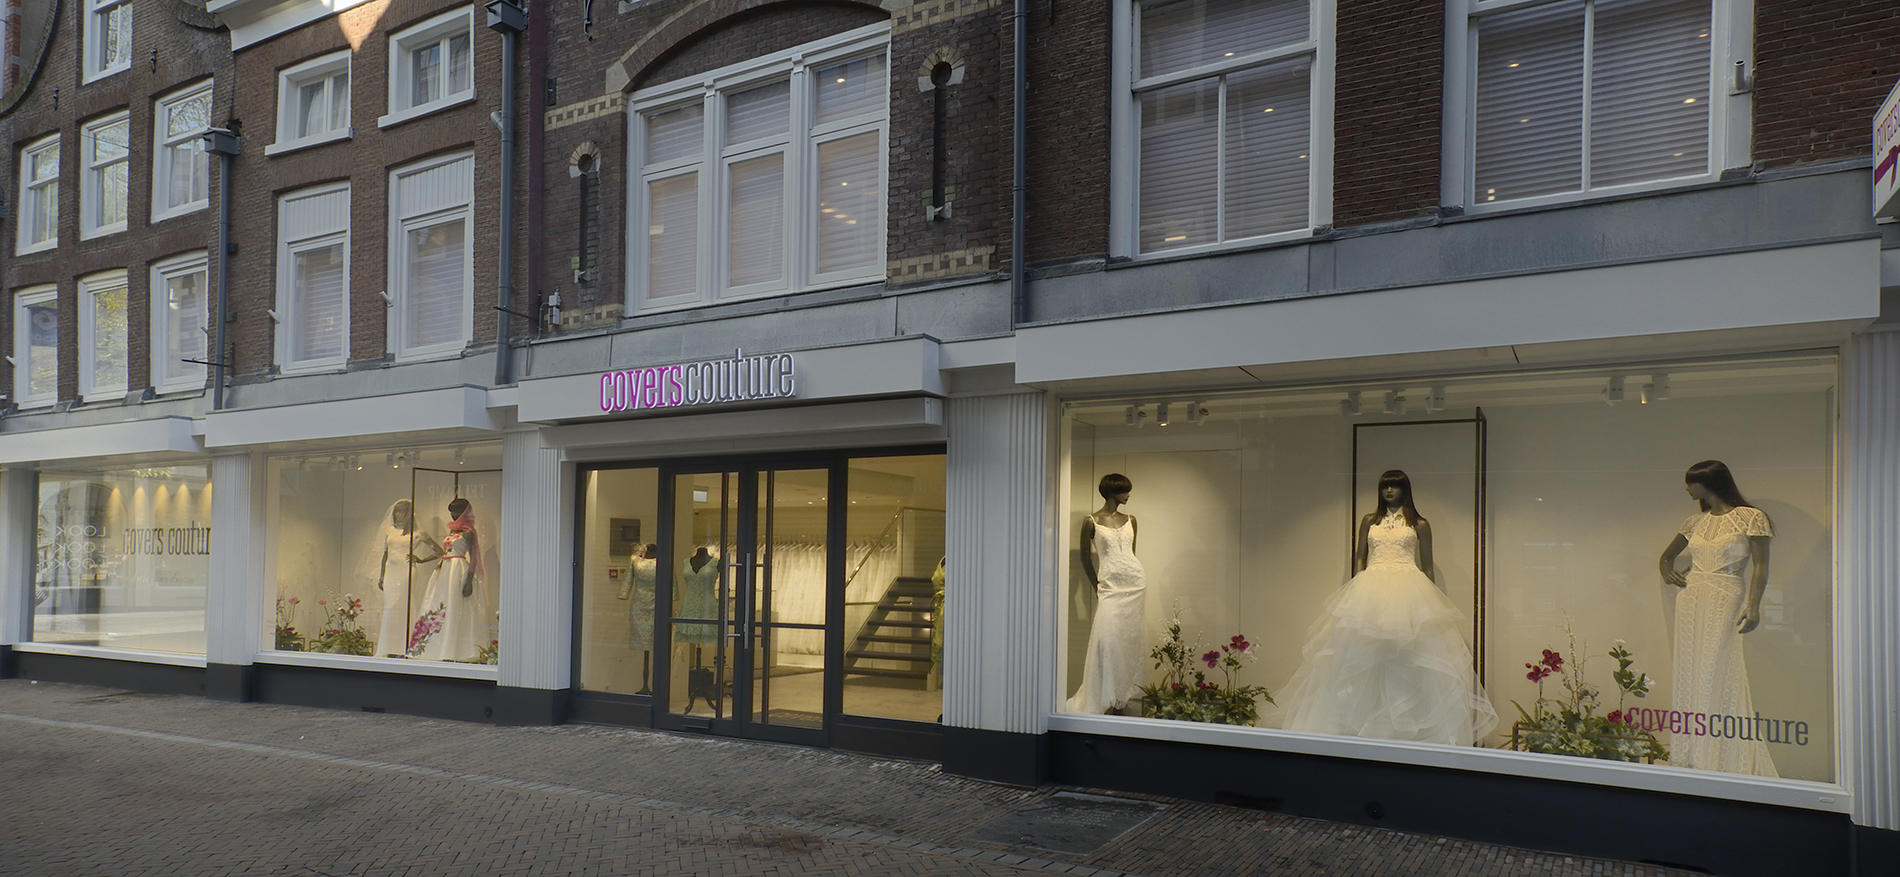 Covers Couture, Utrecht | Bridal shop interior - 